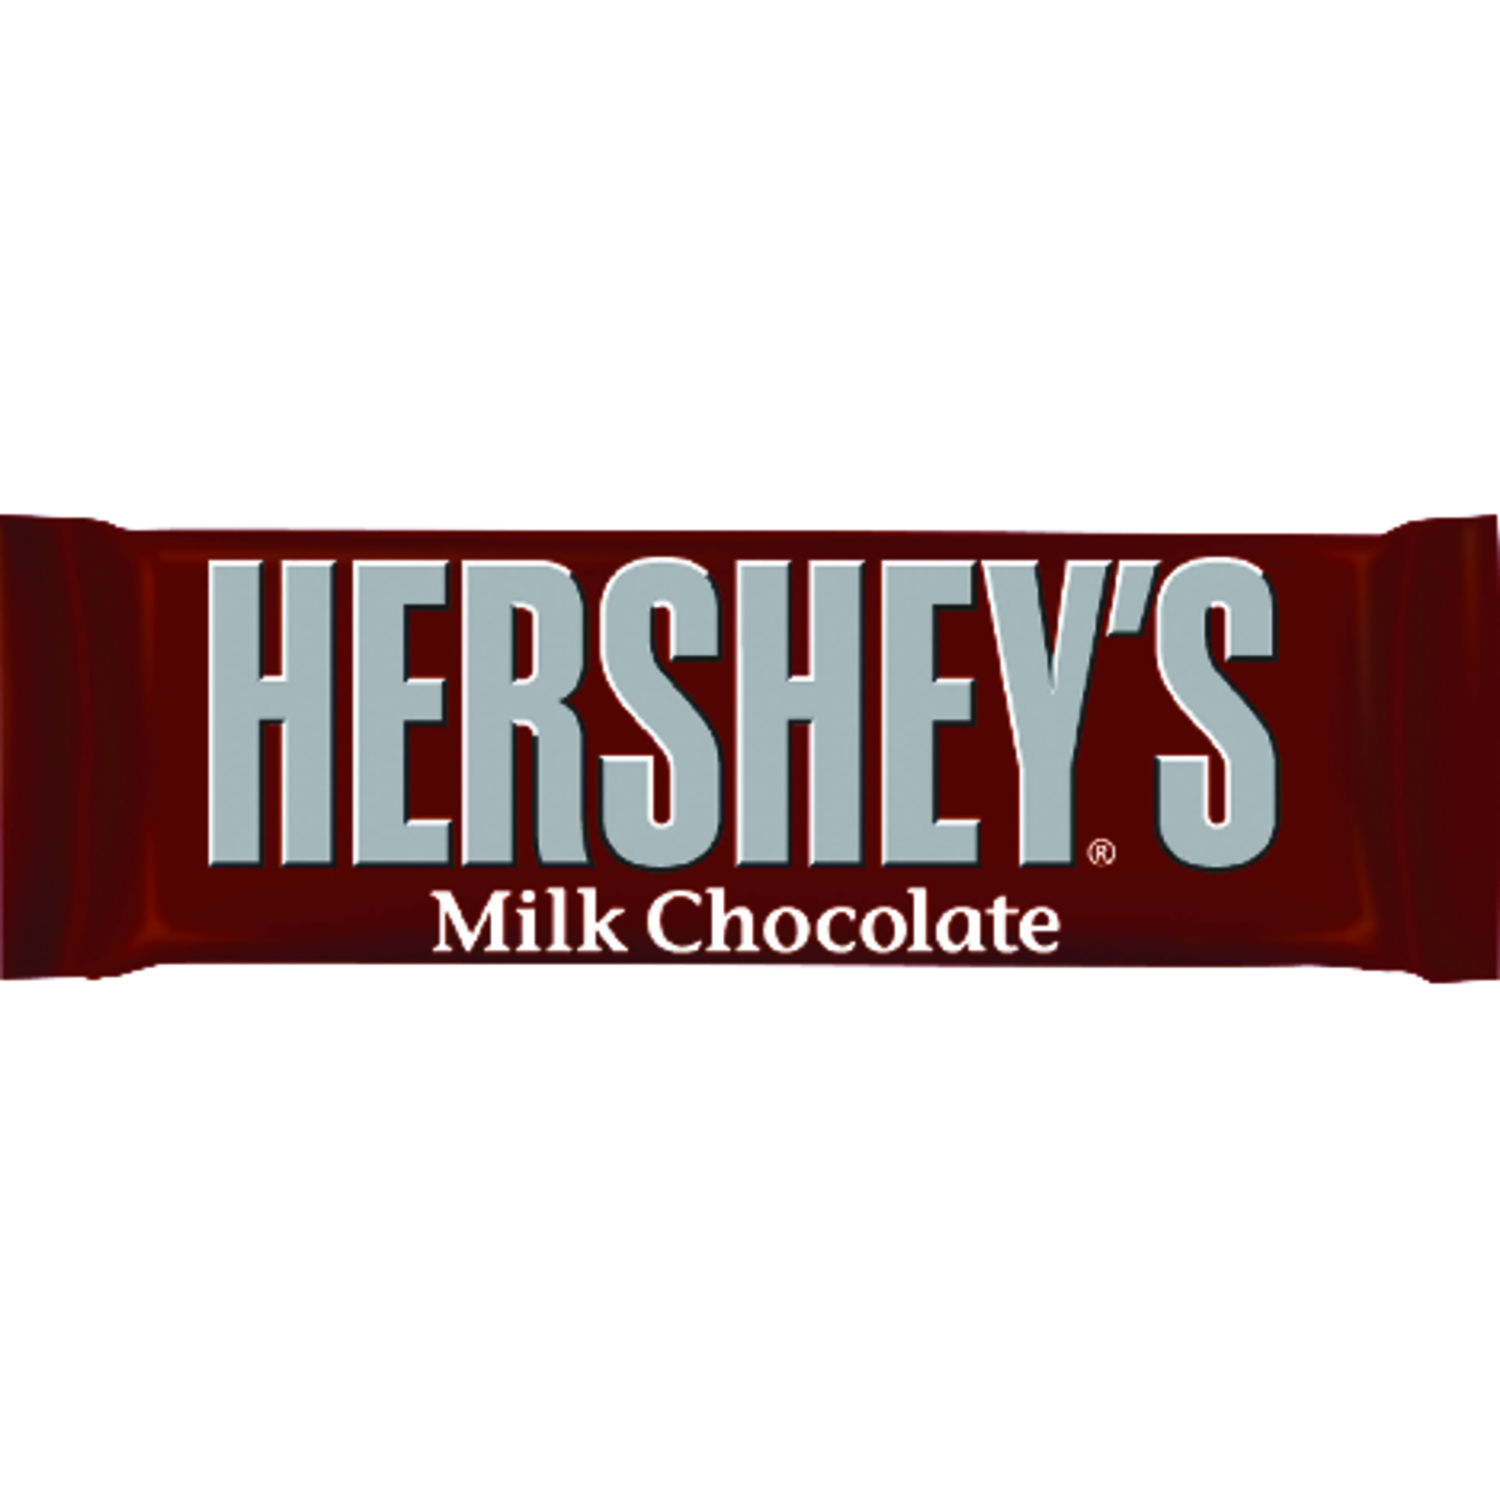 Hershey's Milk Chocolate Candy Bar 1.55 oz